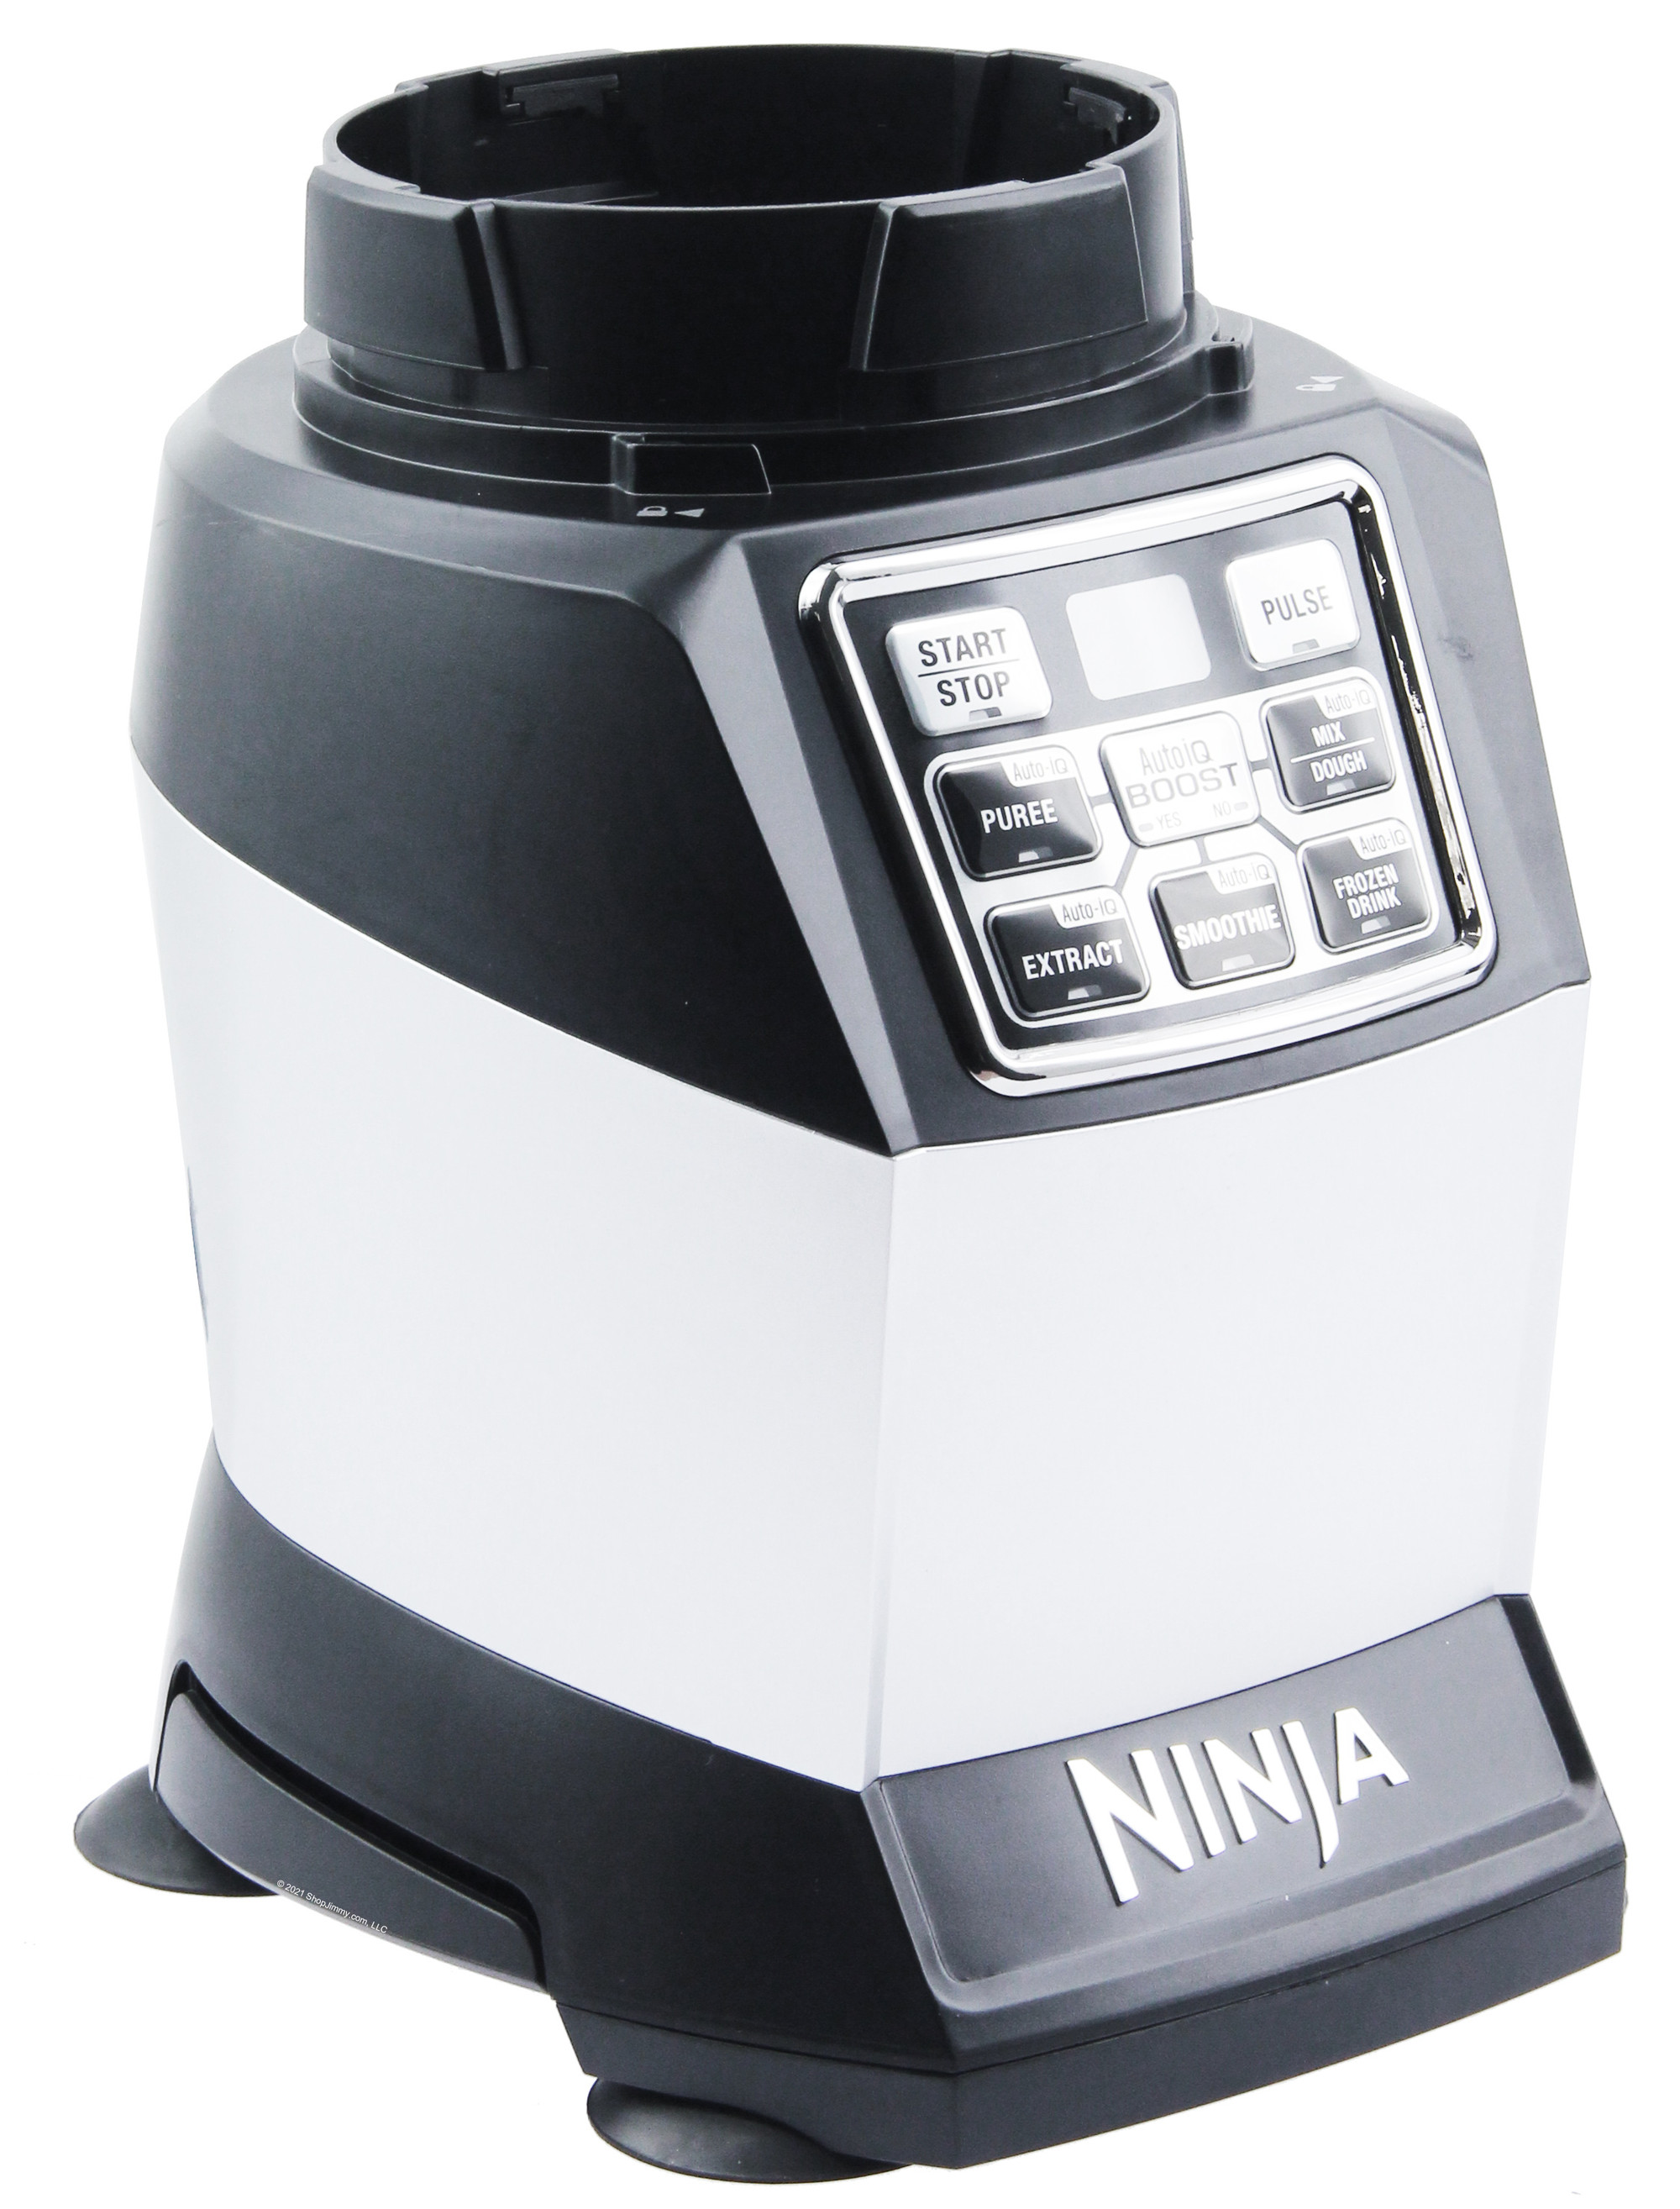 Nutri Ninja Auto IQ Smoothie Blender BL482 30 Motor Base Only